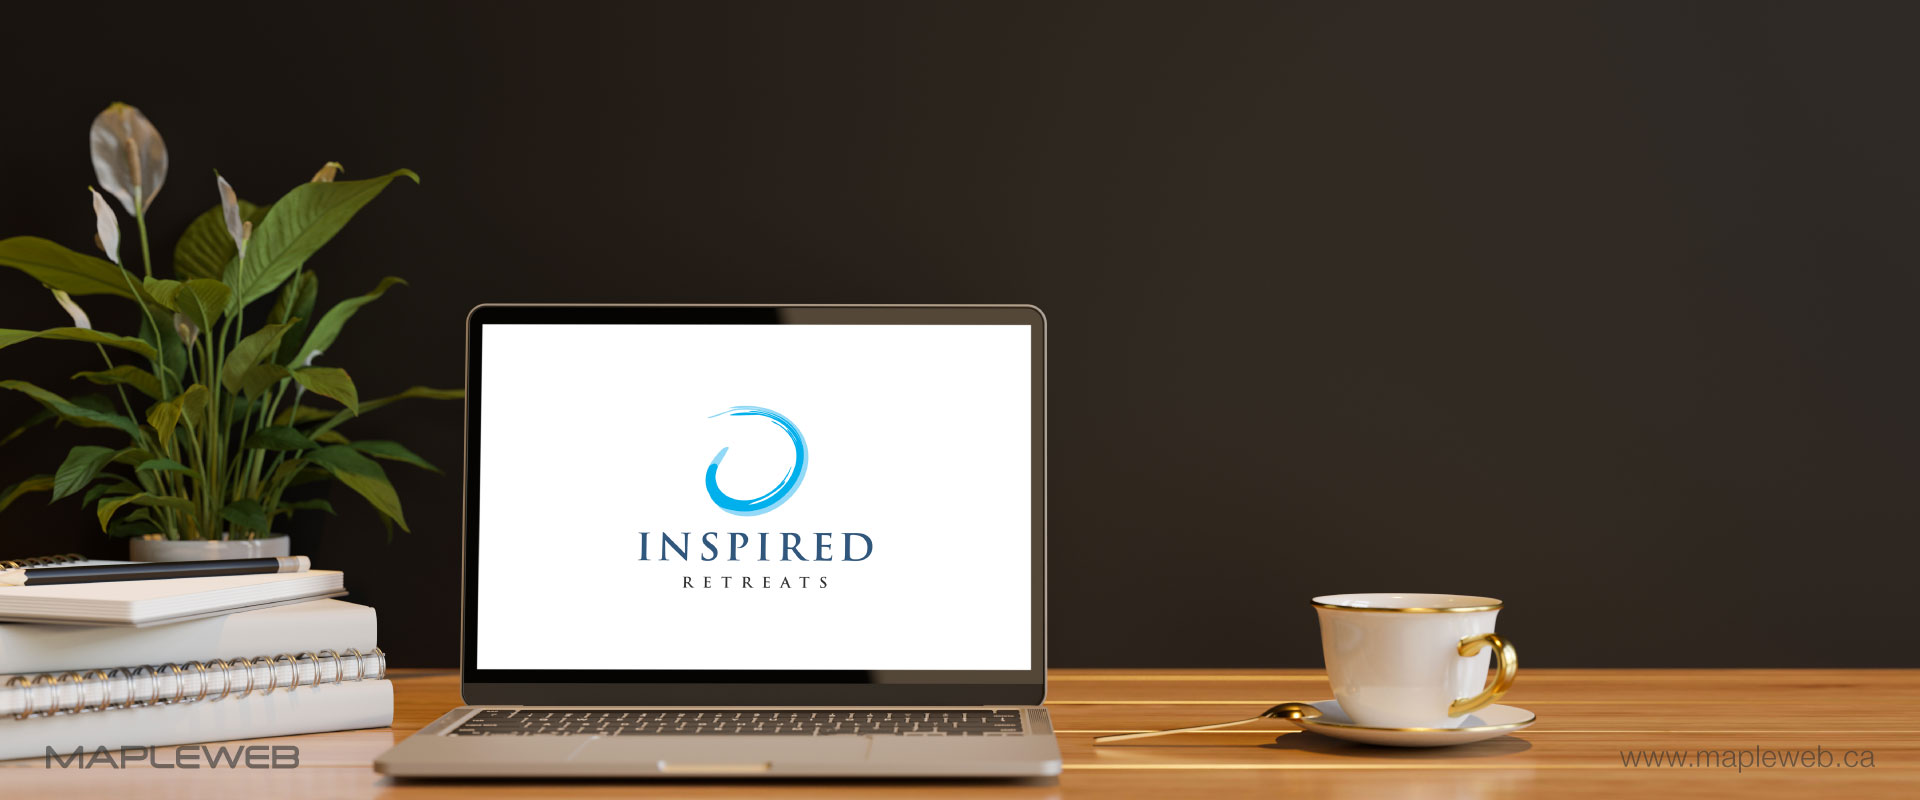 inspired-retreats-brand-logo-design-by-mapleweb-vancouver-canada-laptop-mock